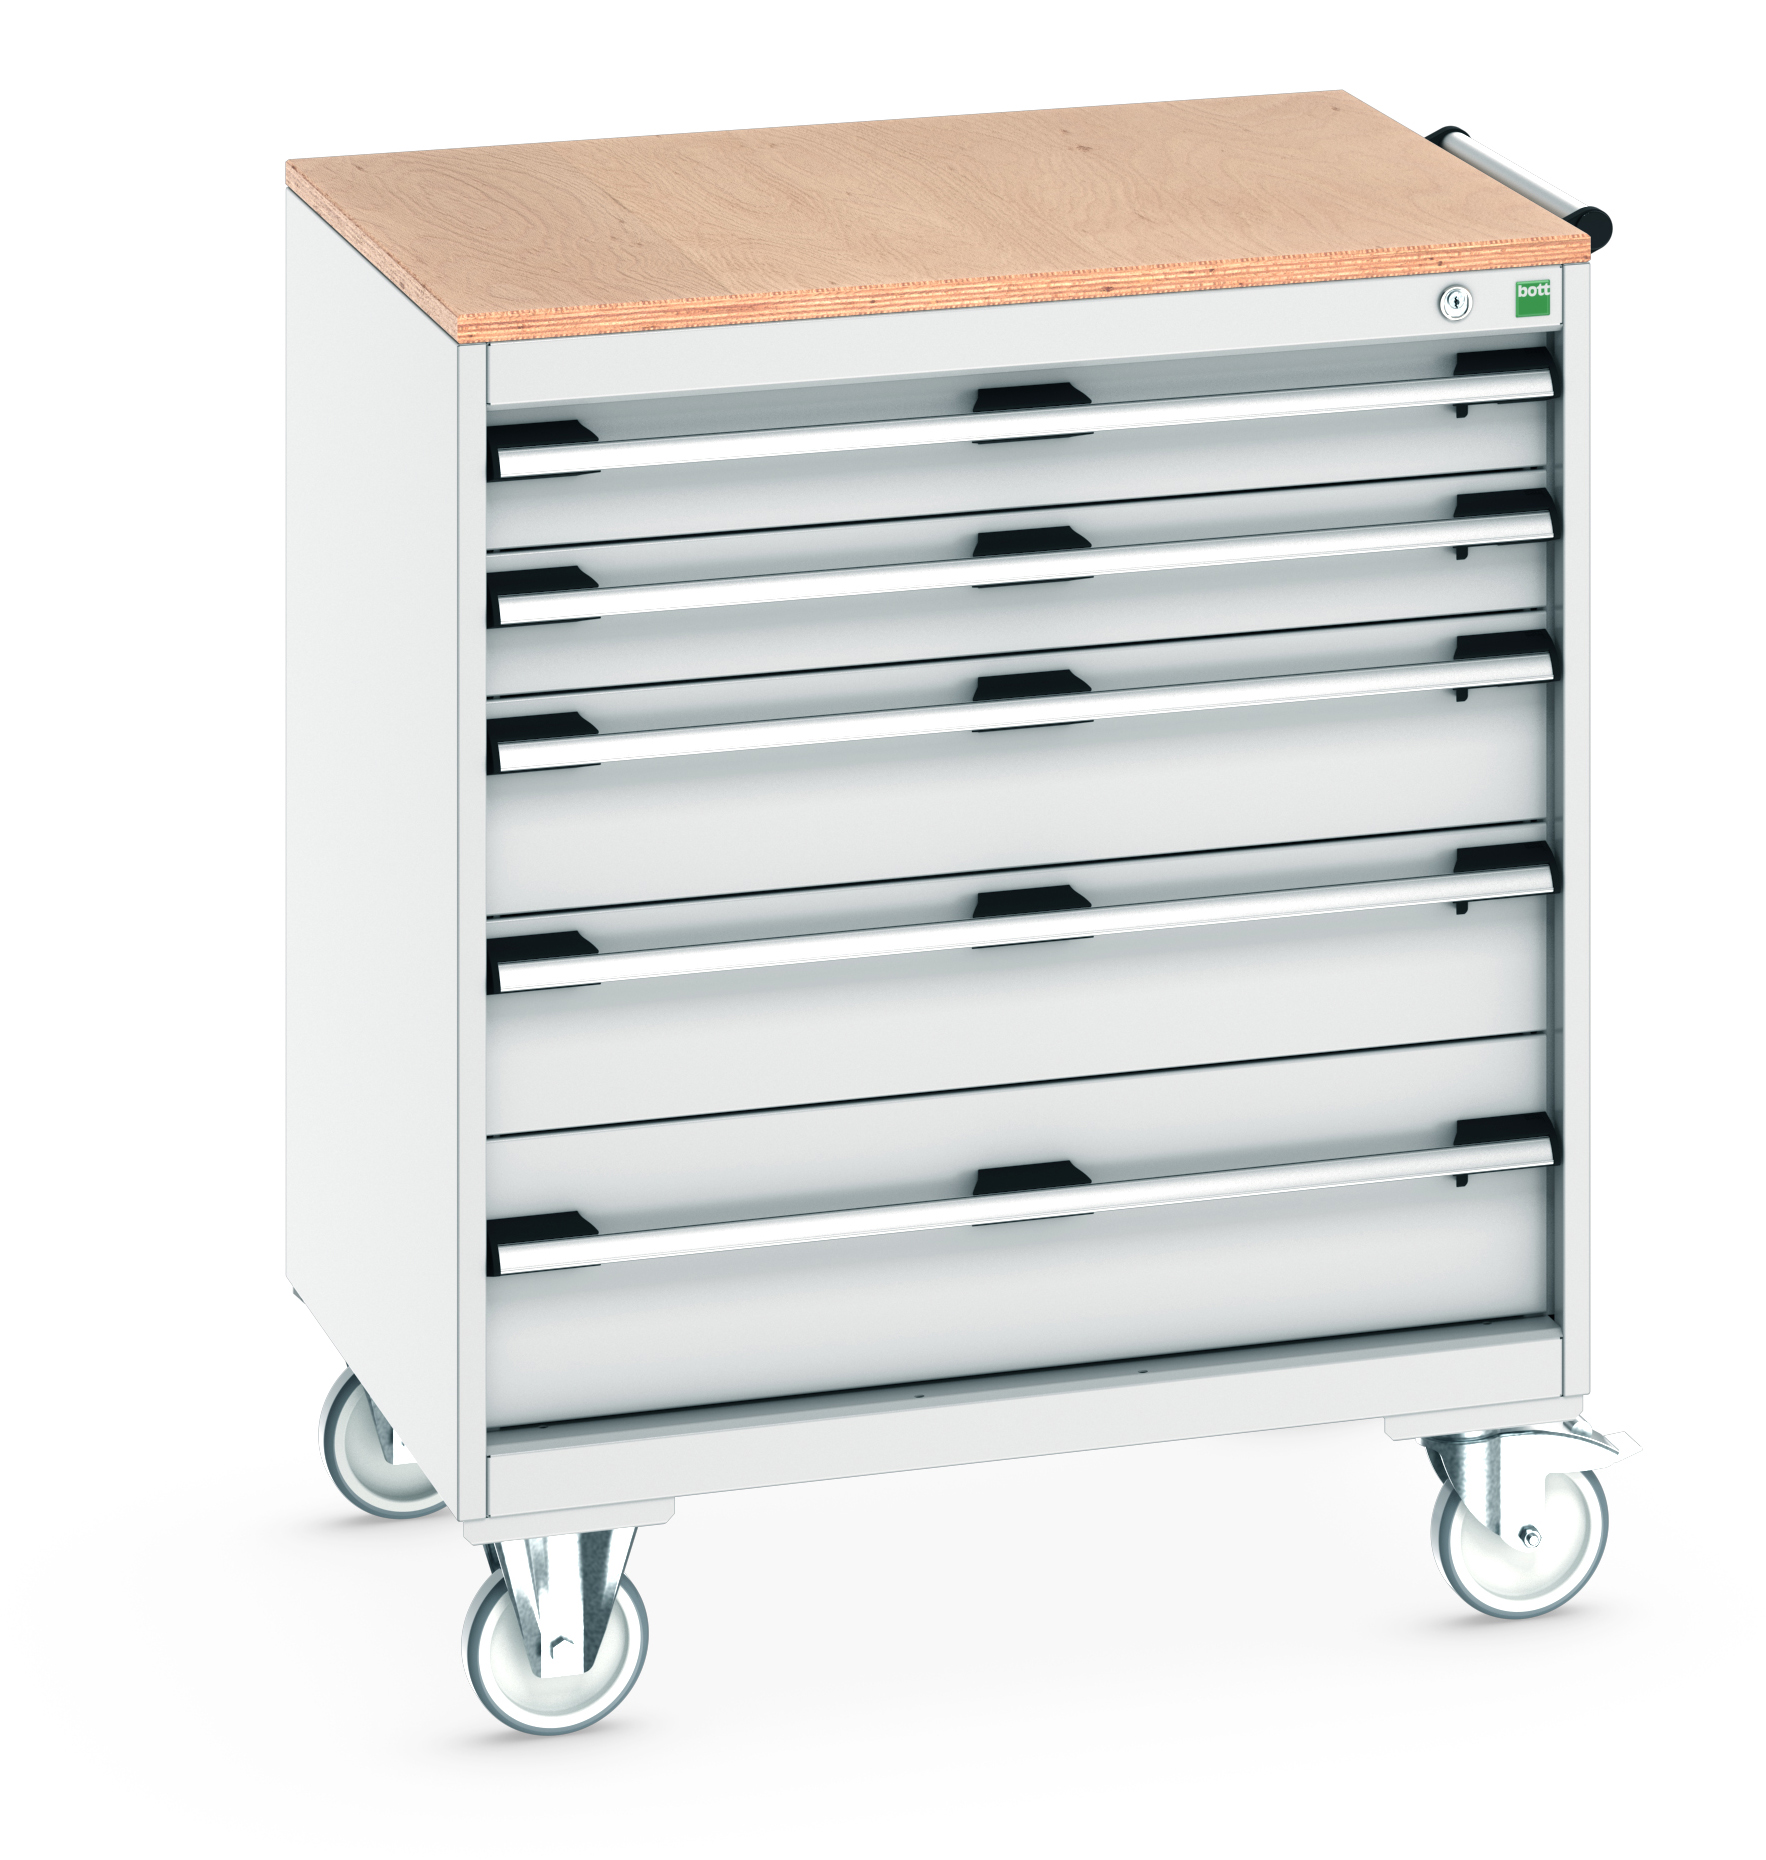 Bott Cubio Mobile Drawer Cabinet With 5 Drawers & Multiplex Worktop - 40402157.16V